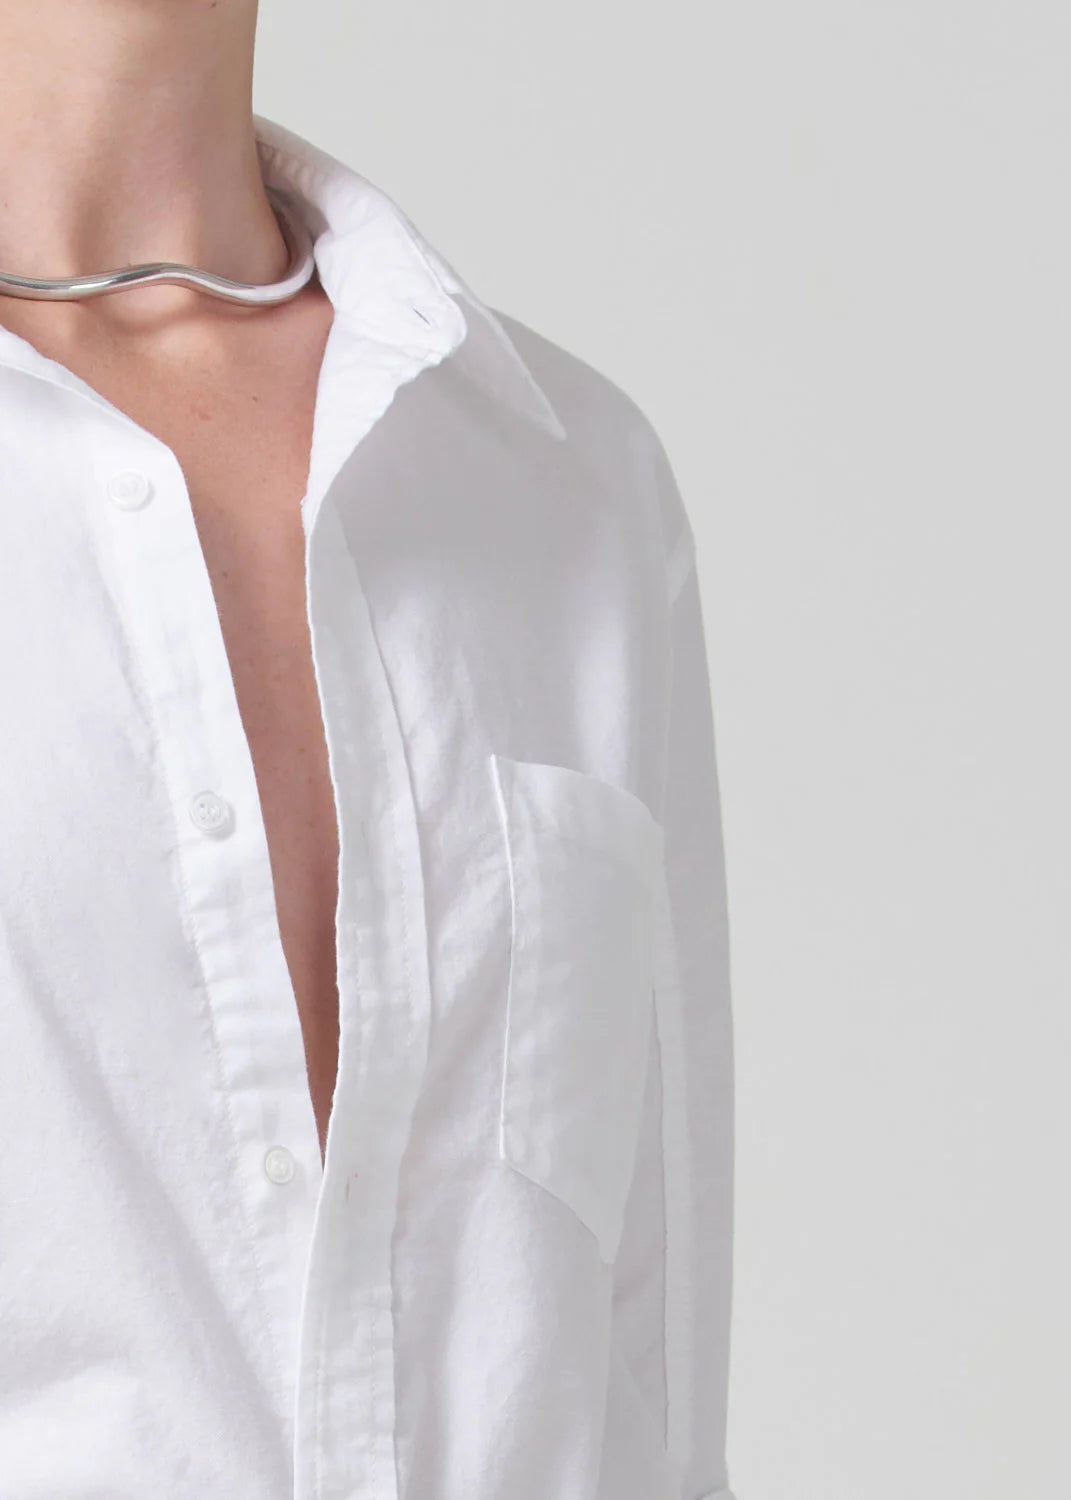 Optic White Kayla Shirt (Shrunken)